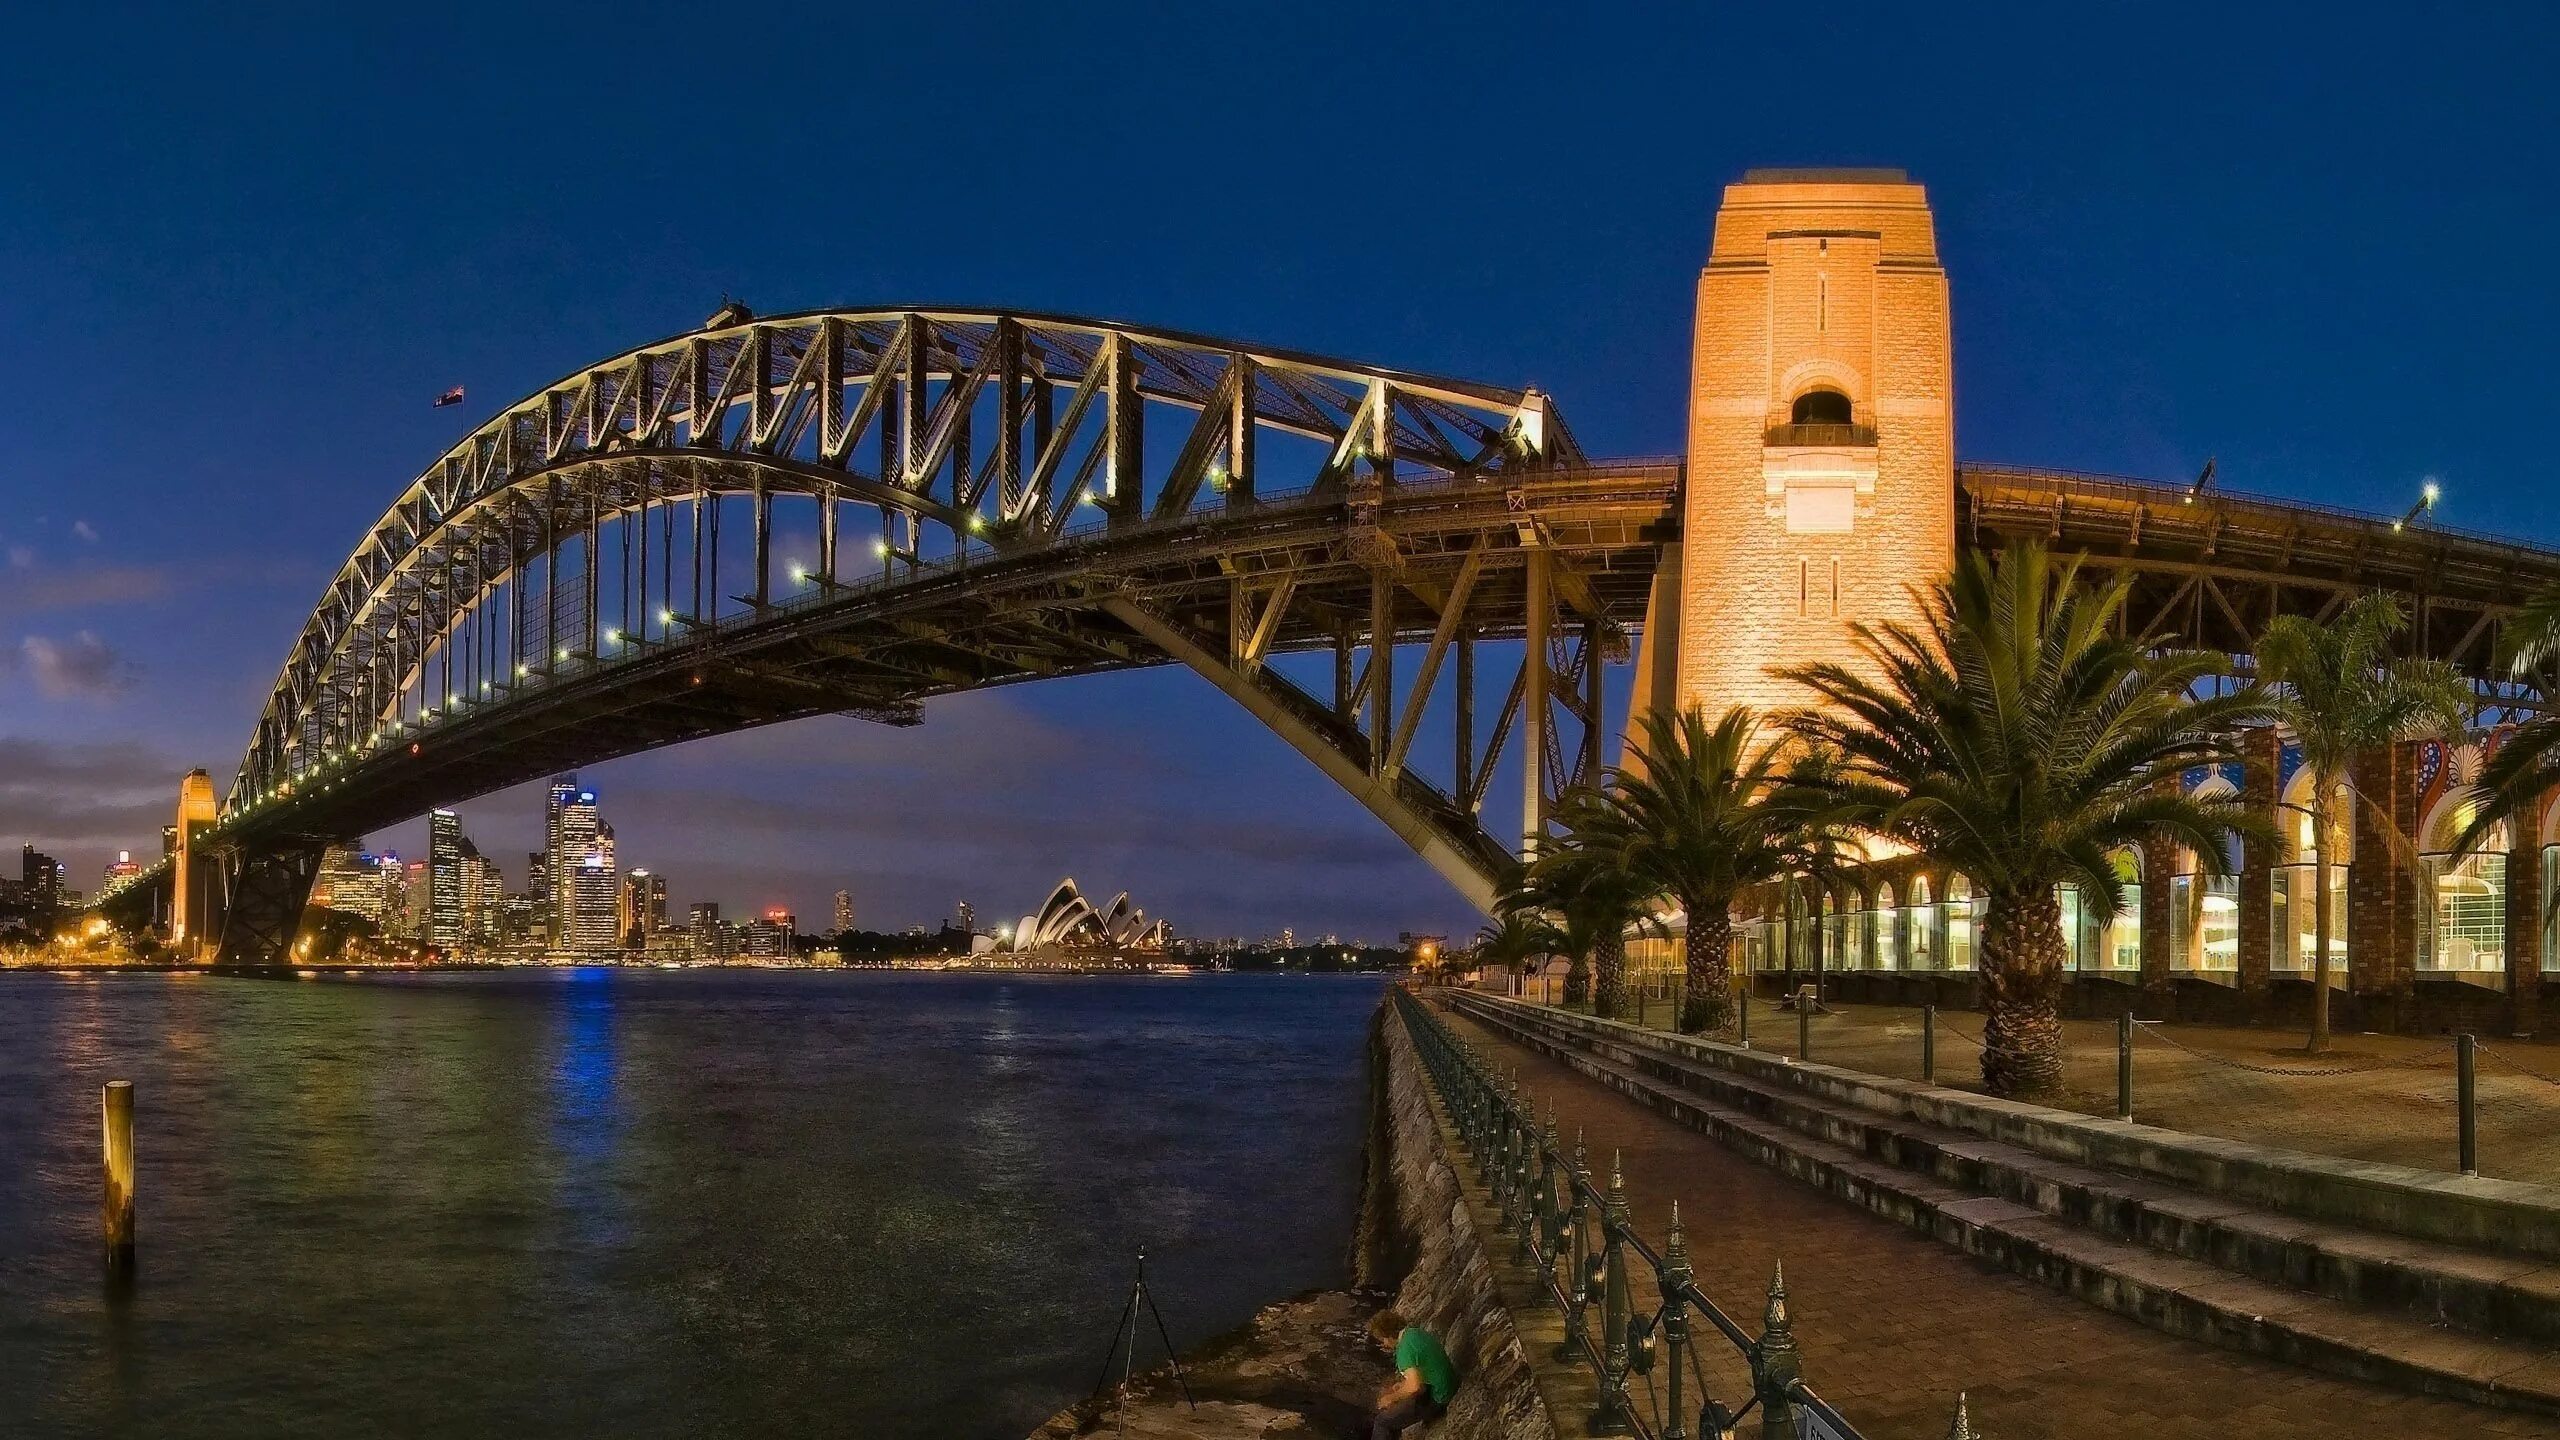 Мост Харбор-бридж в Сиднее. Мост Харбор бридж в Австралии. Харбор-бридж (Сидней, Австралия). Арочный мост Харбор-бридж.